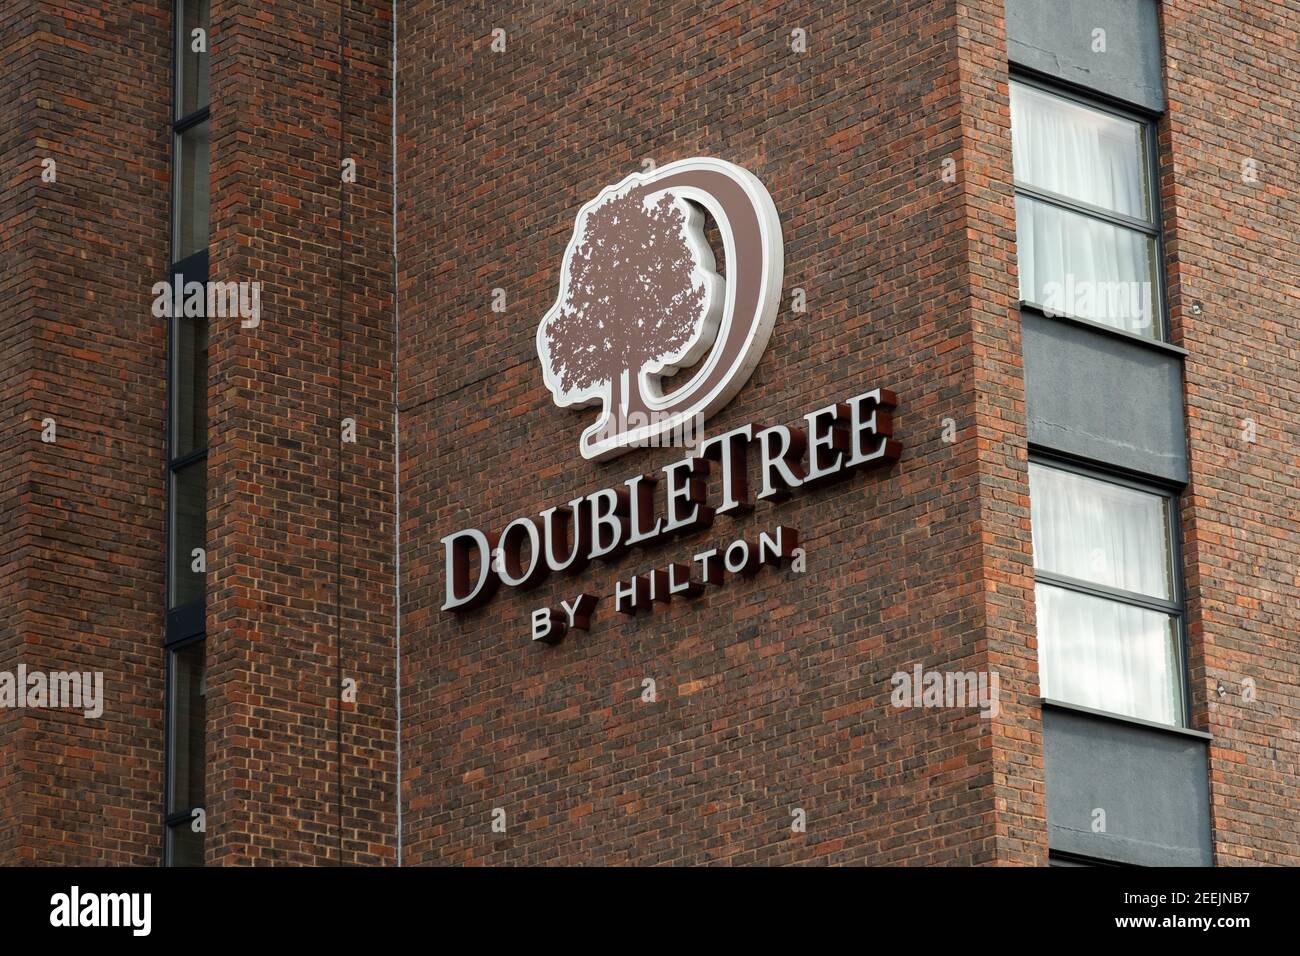 Londra- Gennaio 2021: Hilton Doubletree hotel in Ealing West London - una catena globale di hotel di lusso Foto Stock